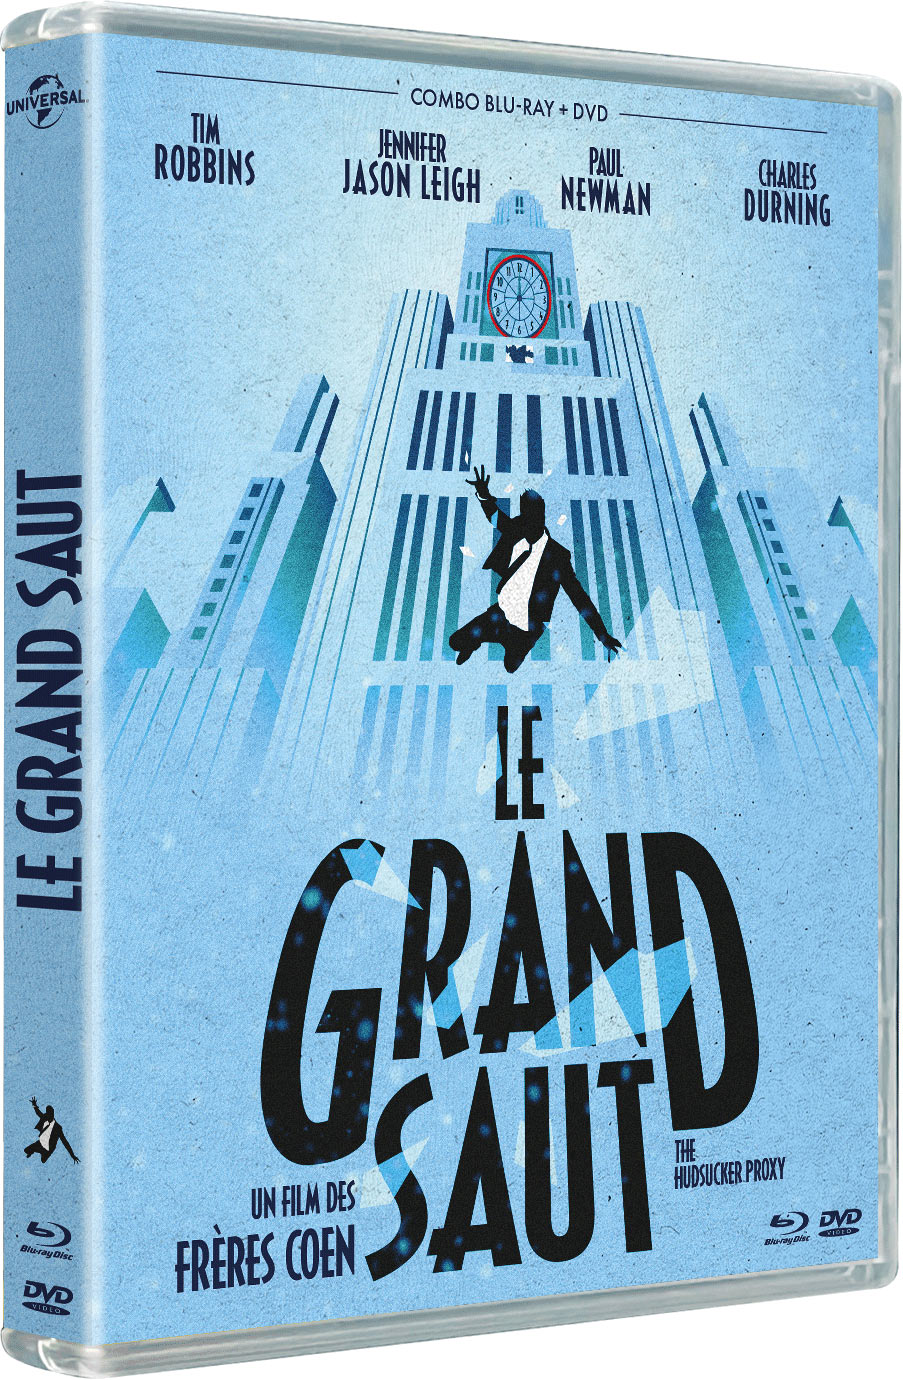 Le Grand Saut - Combo Blu-ray + DVD